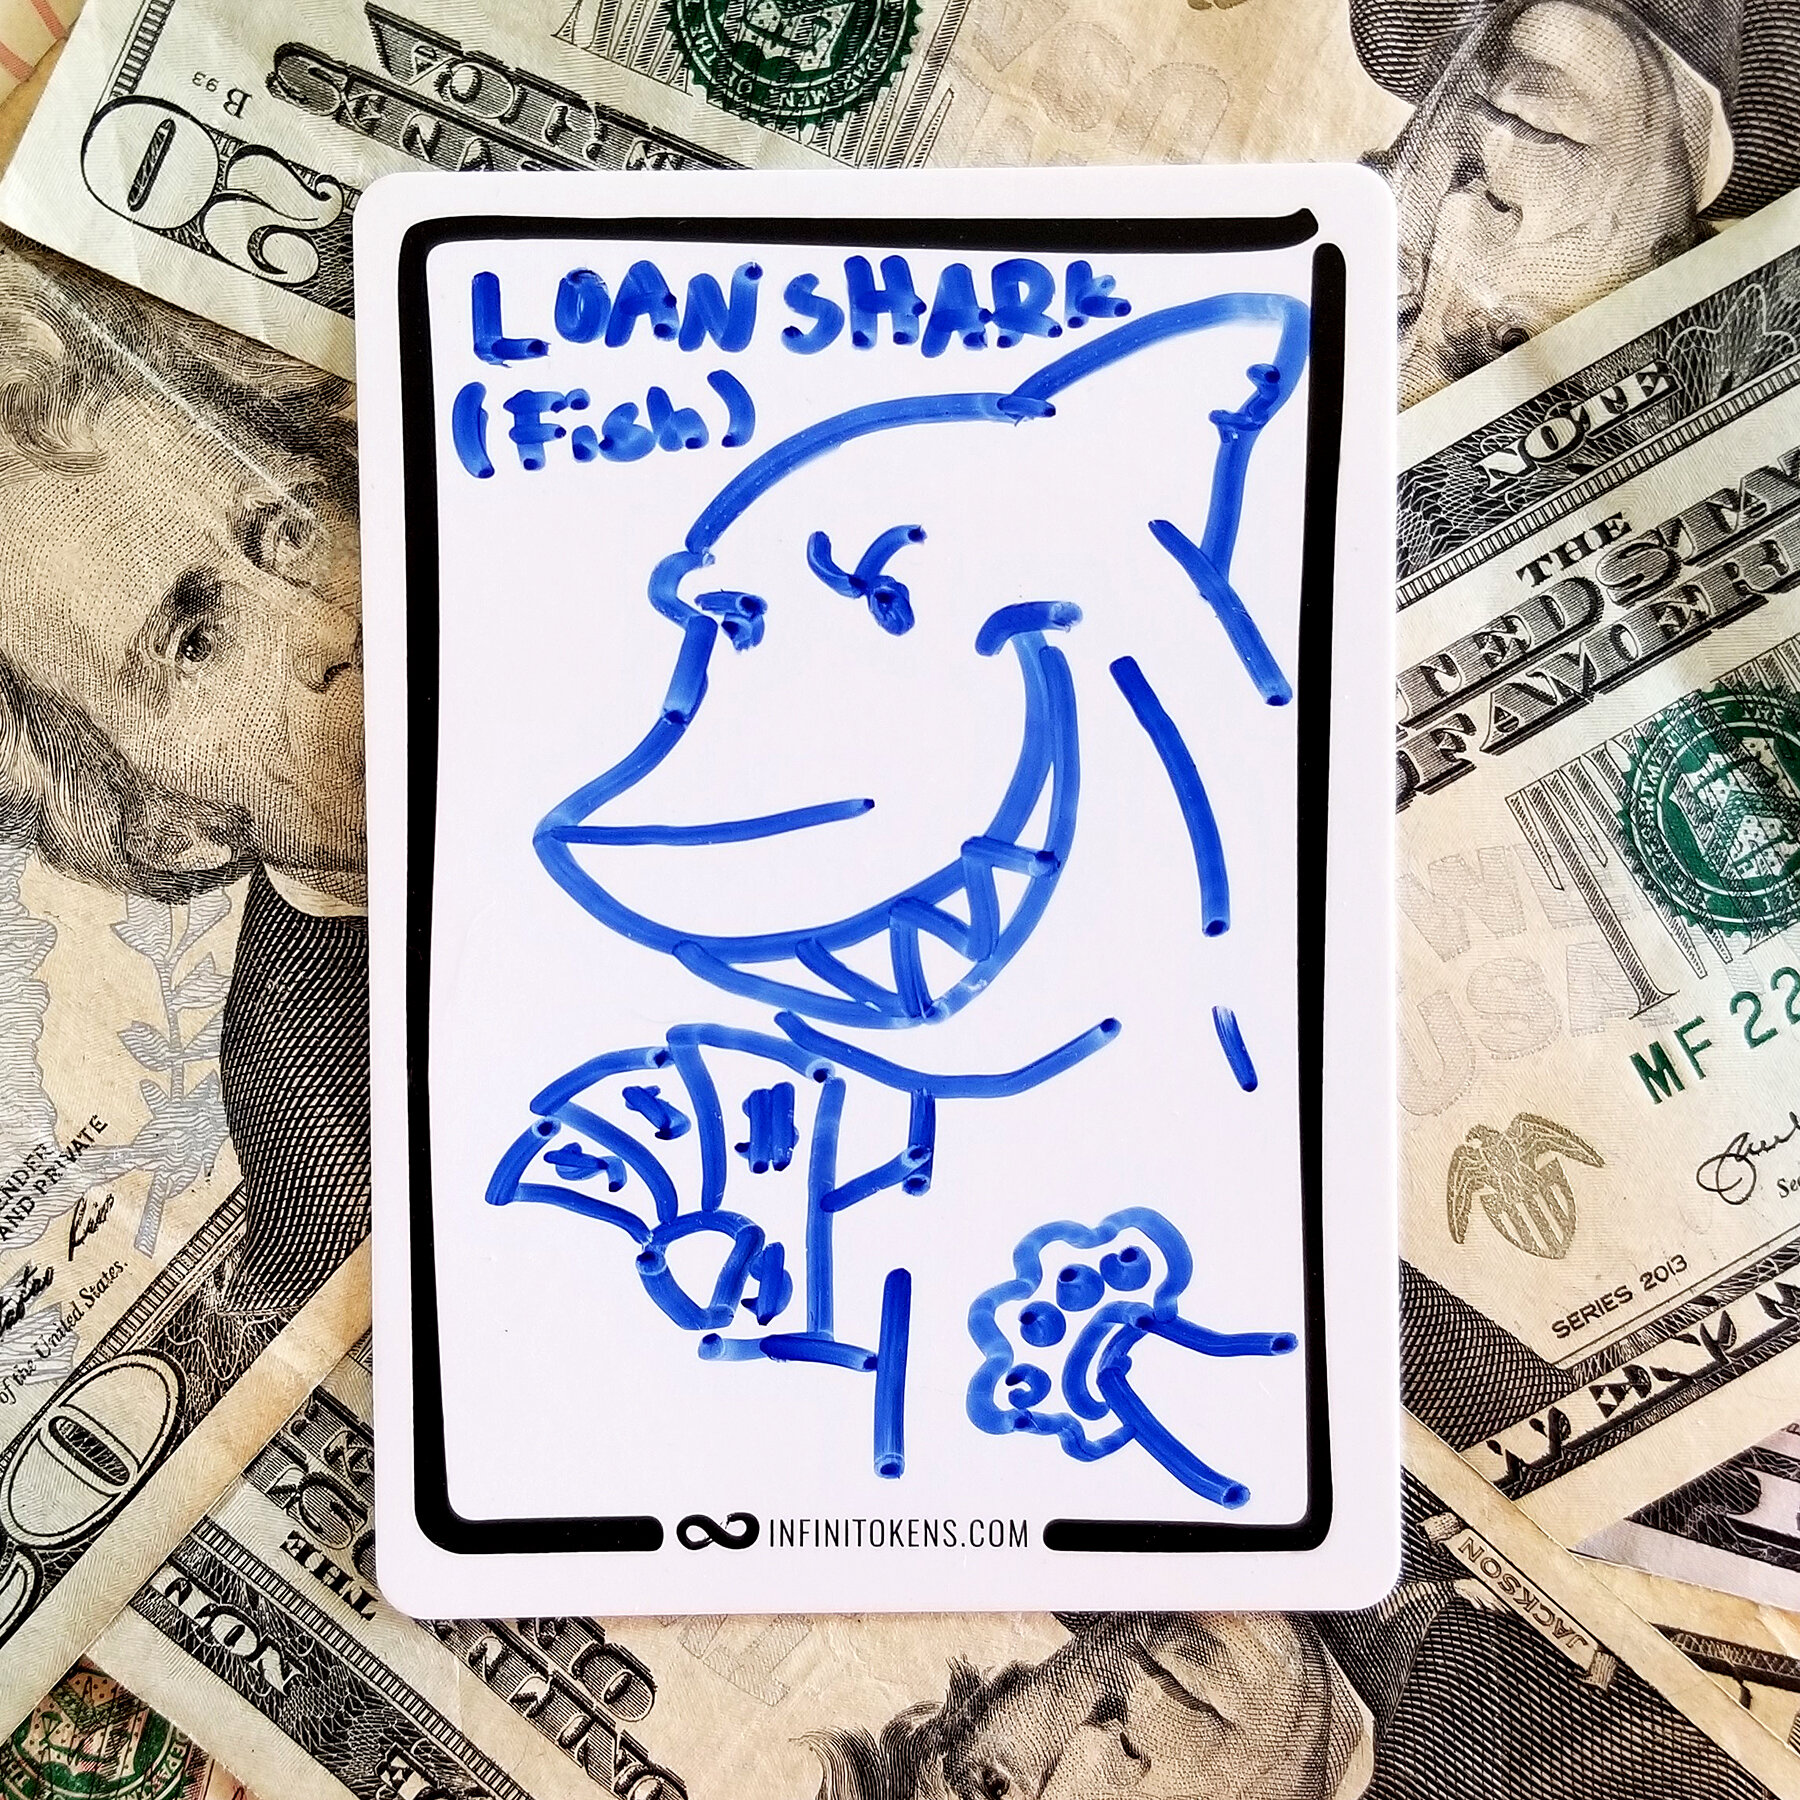 LoanShark_SharkWeek.jpg